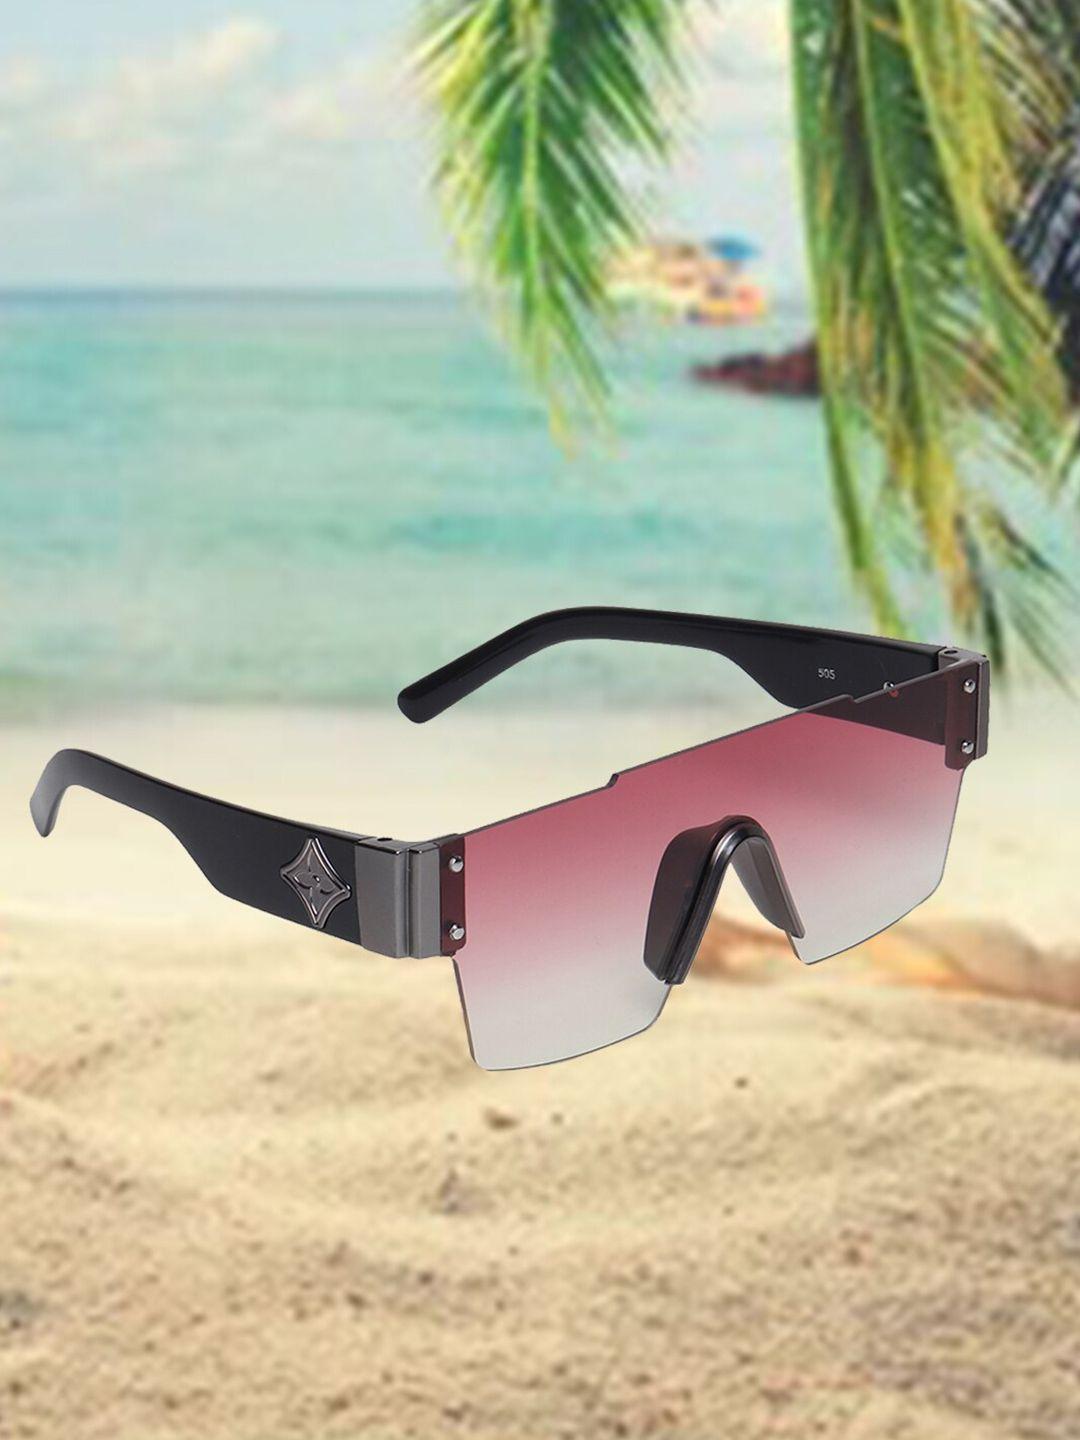 celebrity sunglasses rimless sheild sunglasses with uv protected lens clsg-505-03